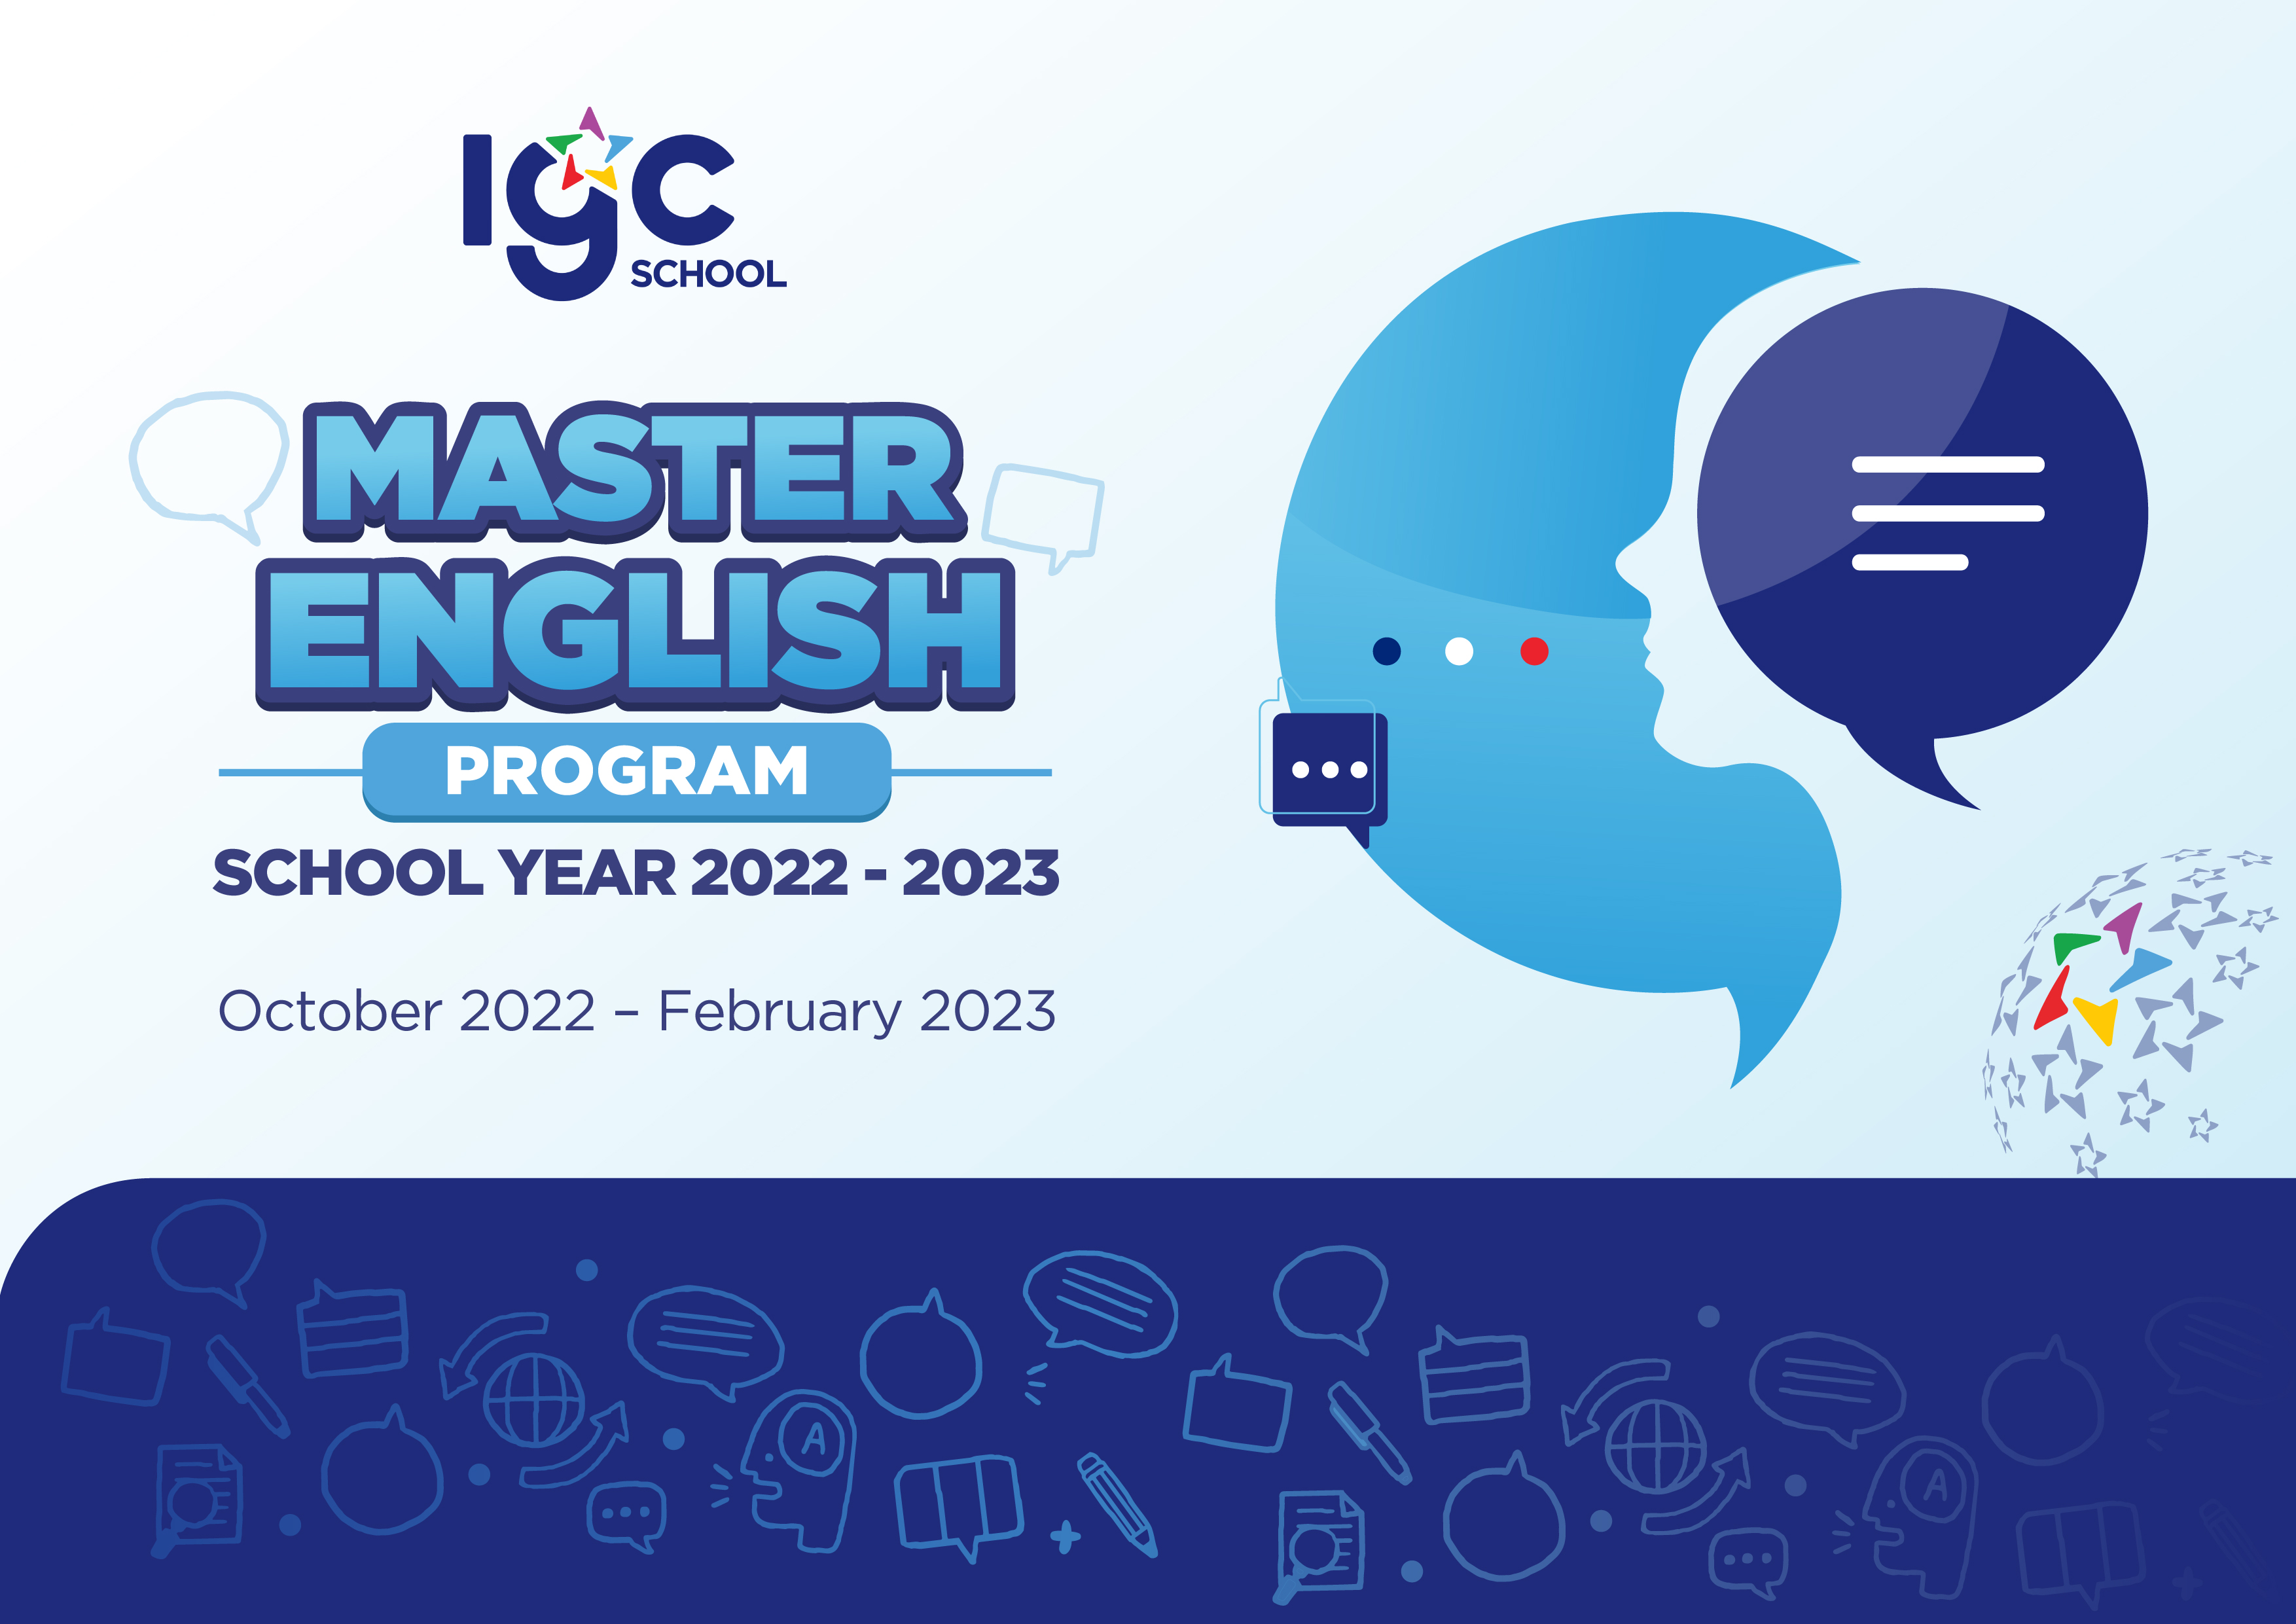 IGC School Master English 2022-2023 is back again!